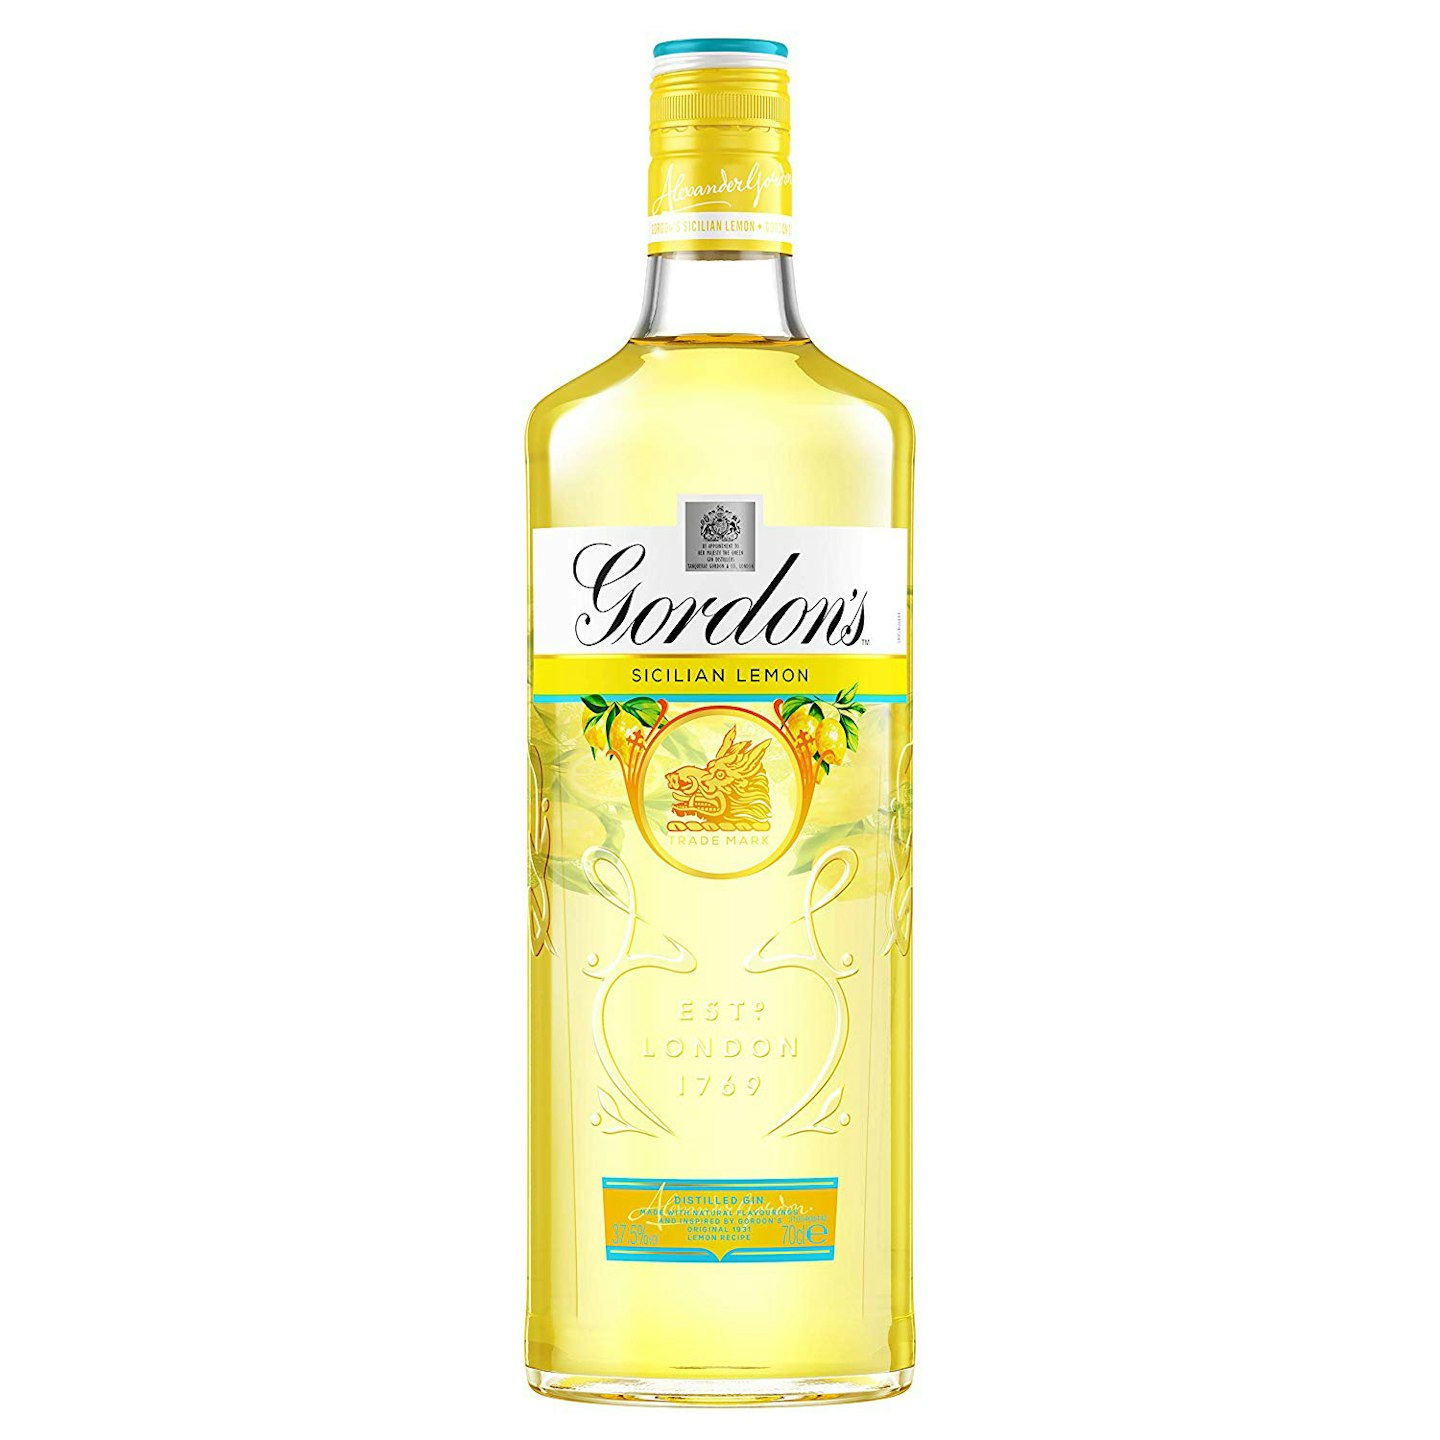 Gordonu2019s Sicilian Lemon Distilled Gin